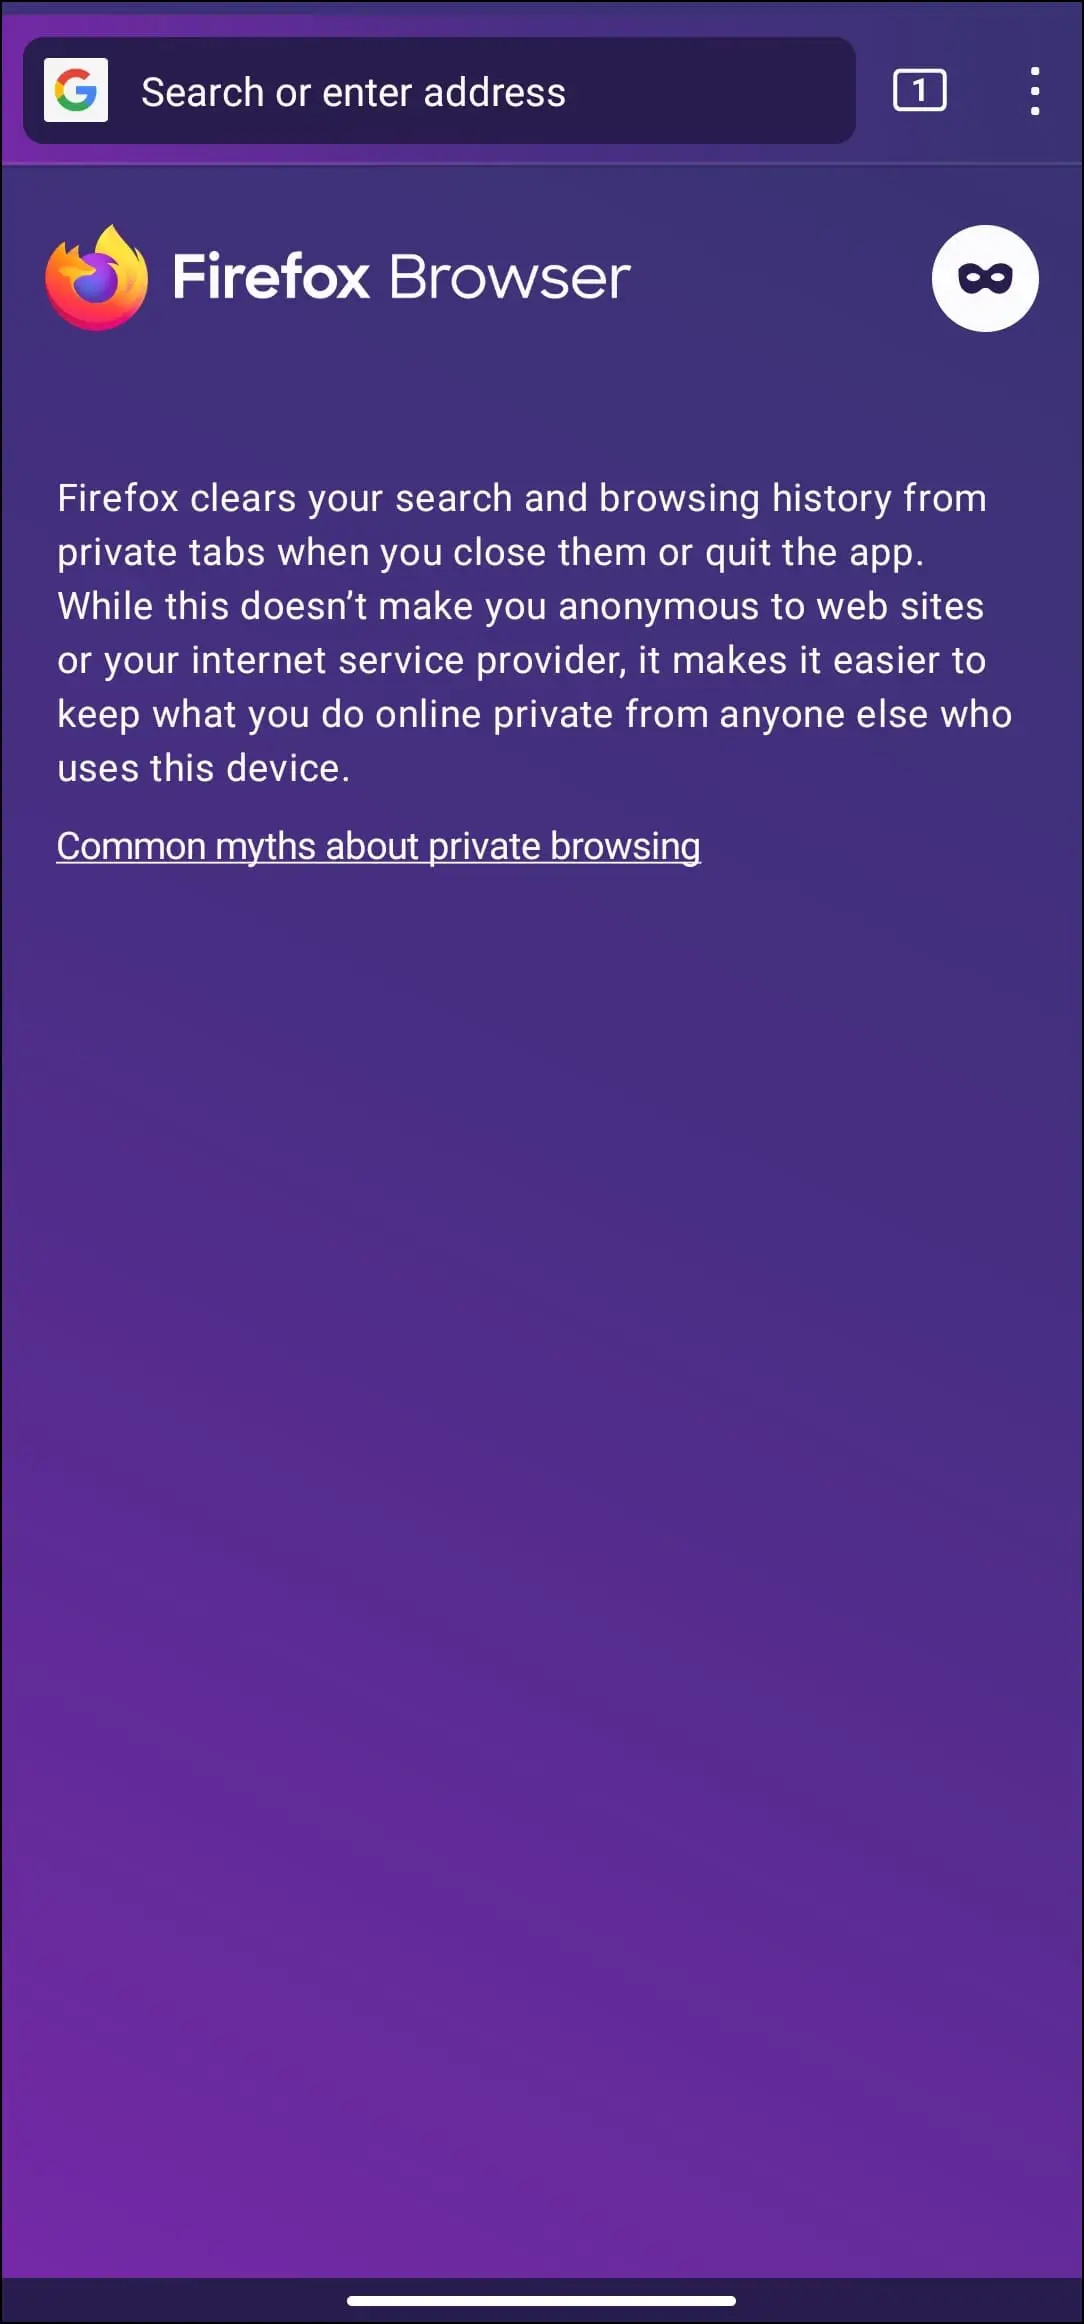 Enable Screenshot in Firefox Private Window